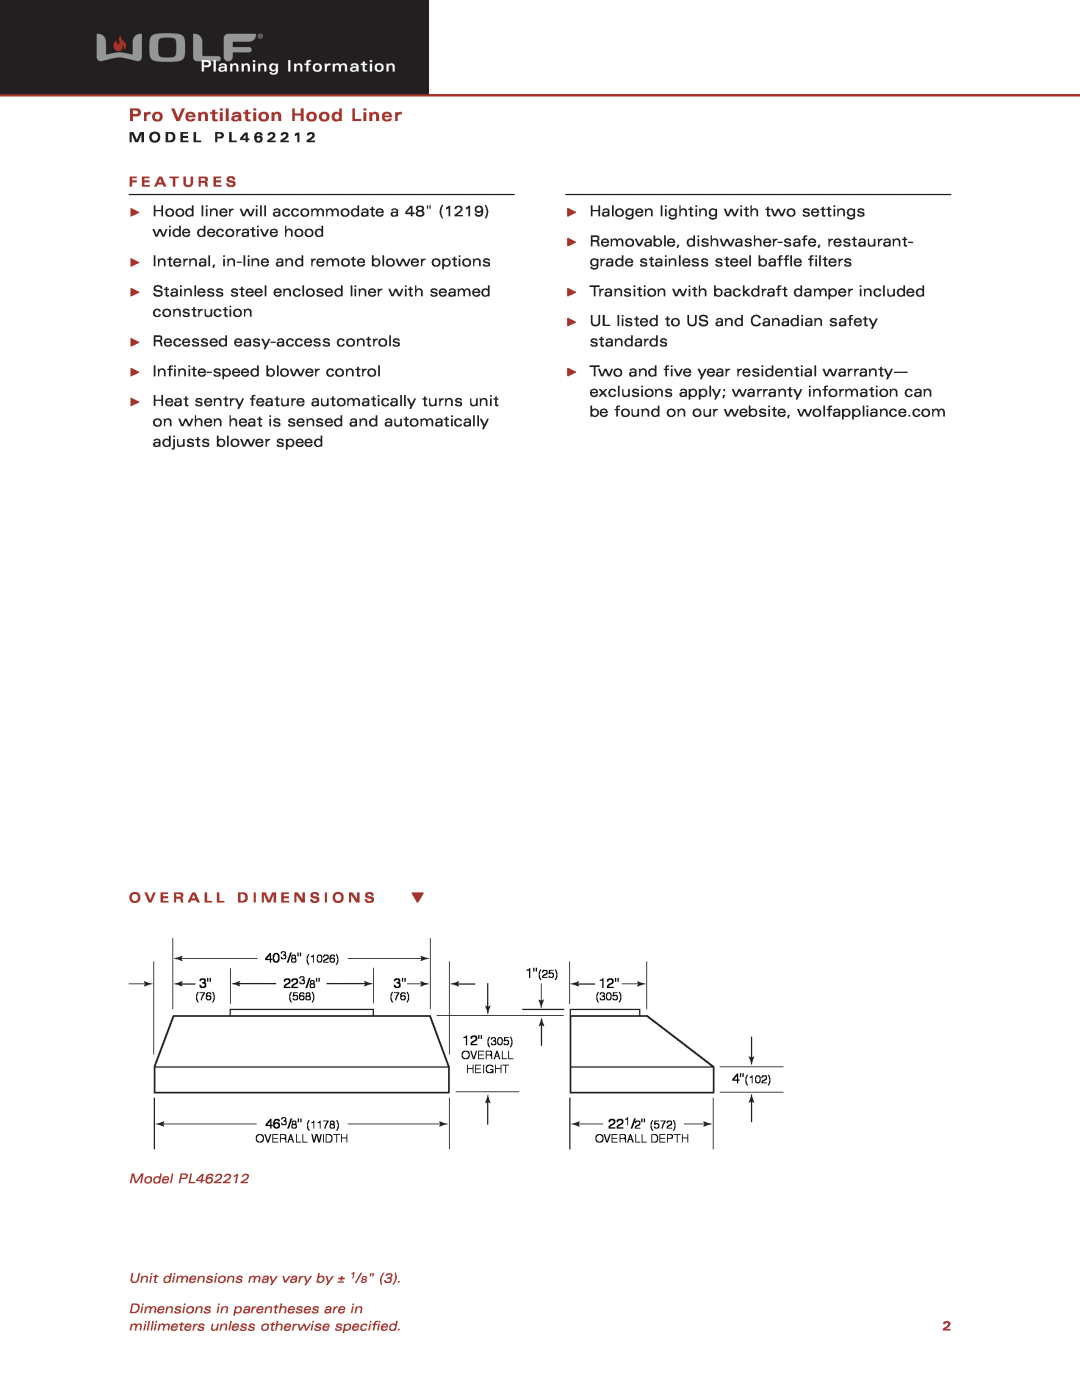 Wolf Appliance Company PL462212 Pro Ventilation Hood Liner, Planning Information, M O D E L P L 4 6, F E A T U R E S 